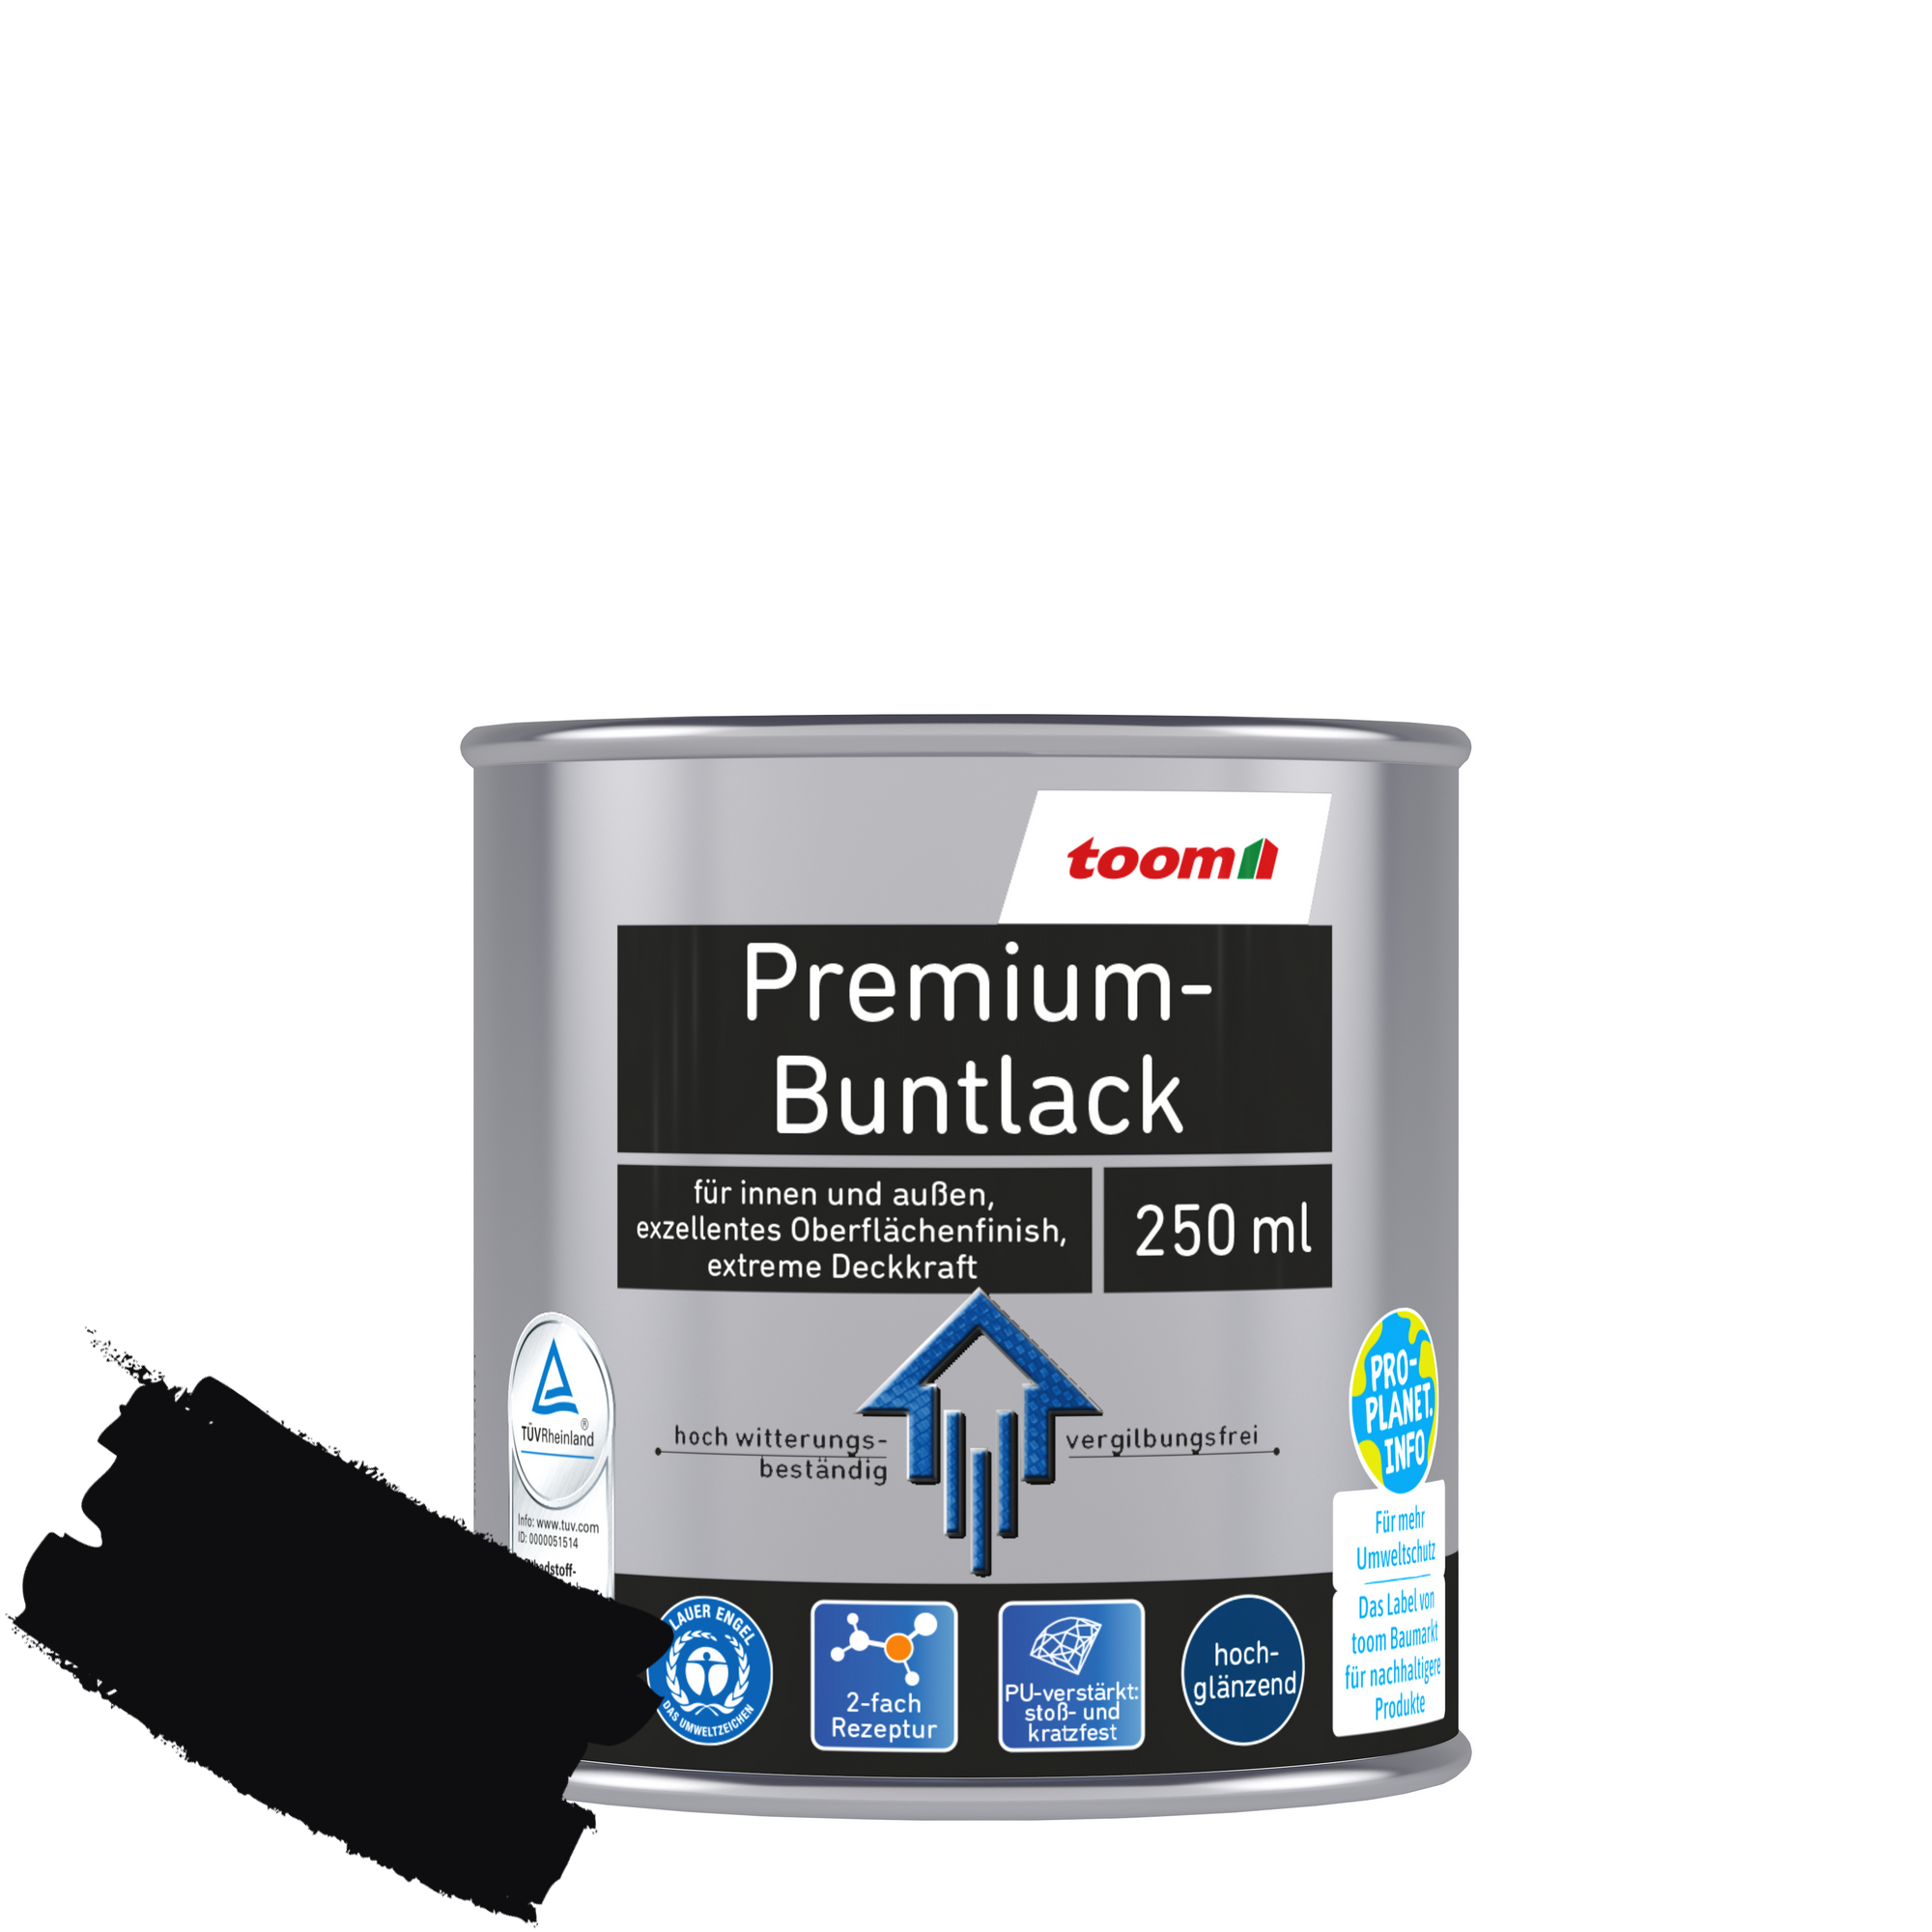 Premium-Buntlack tiefschwarz glänzend 250 ml + product picture